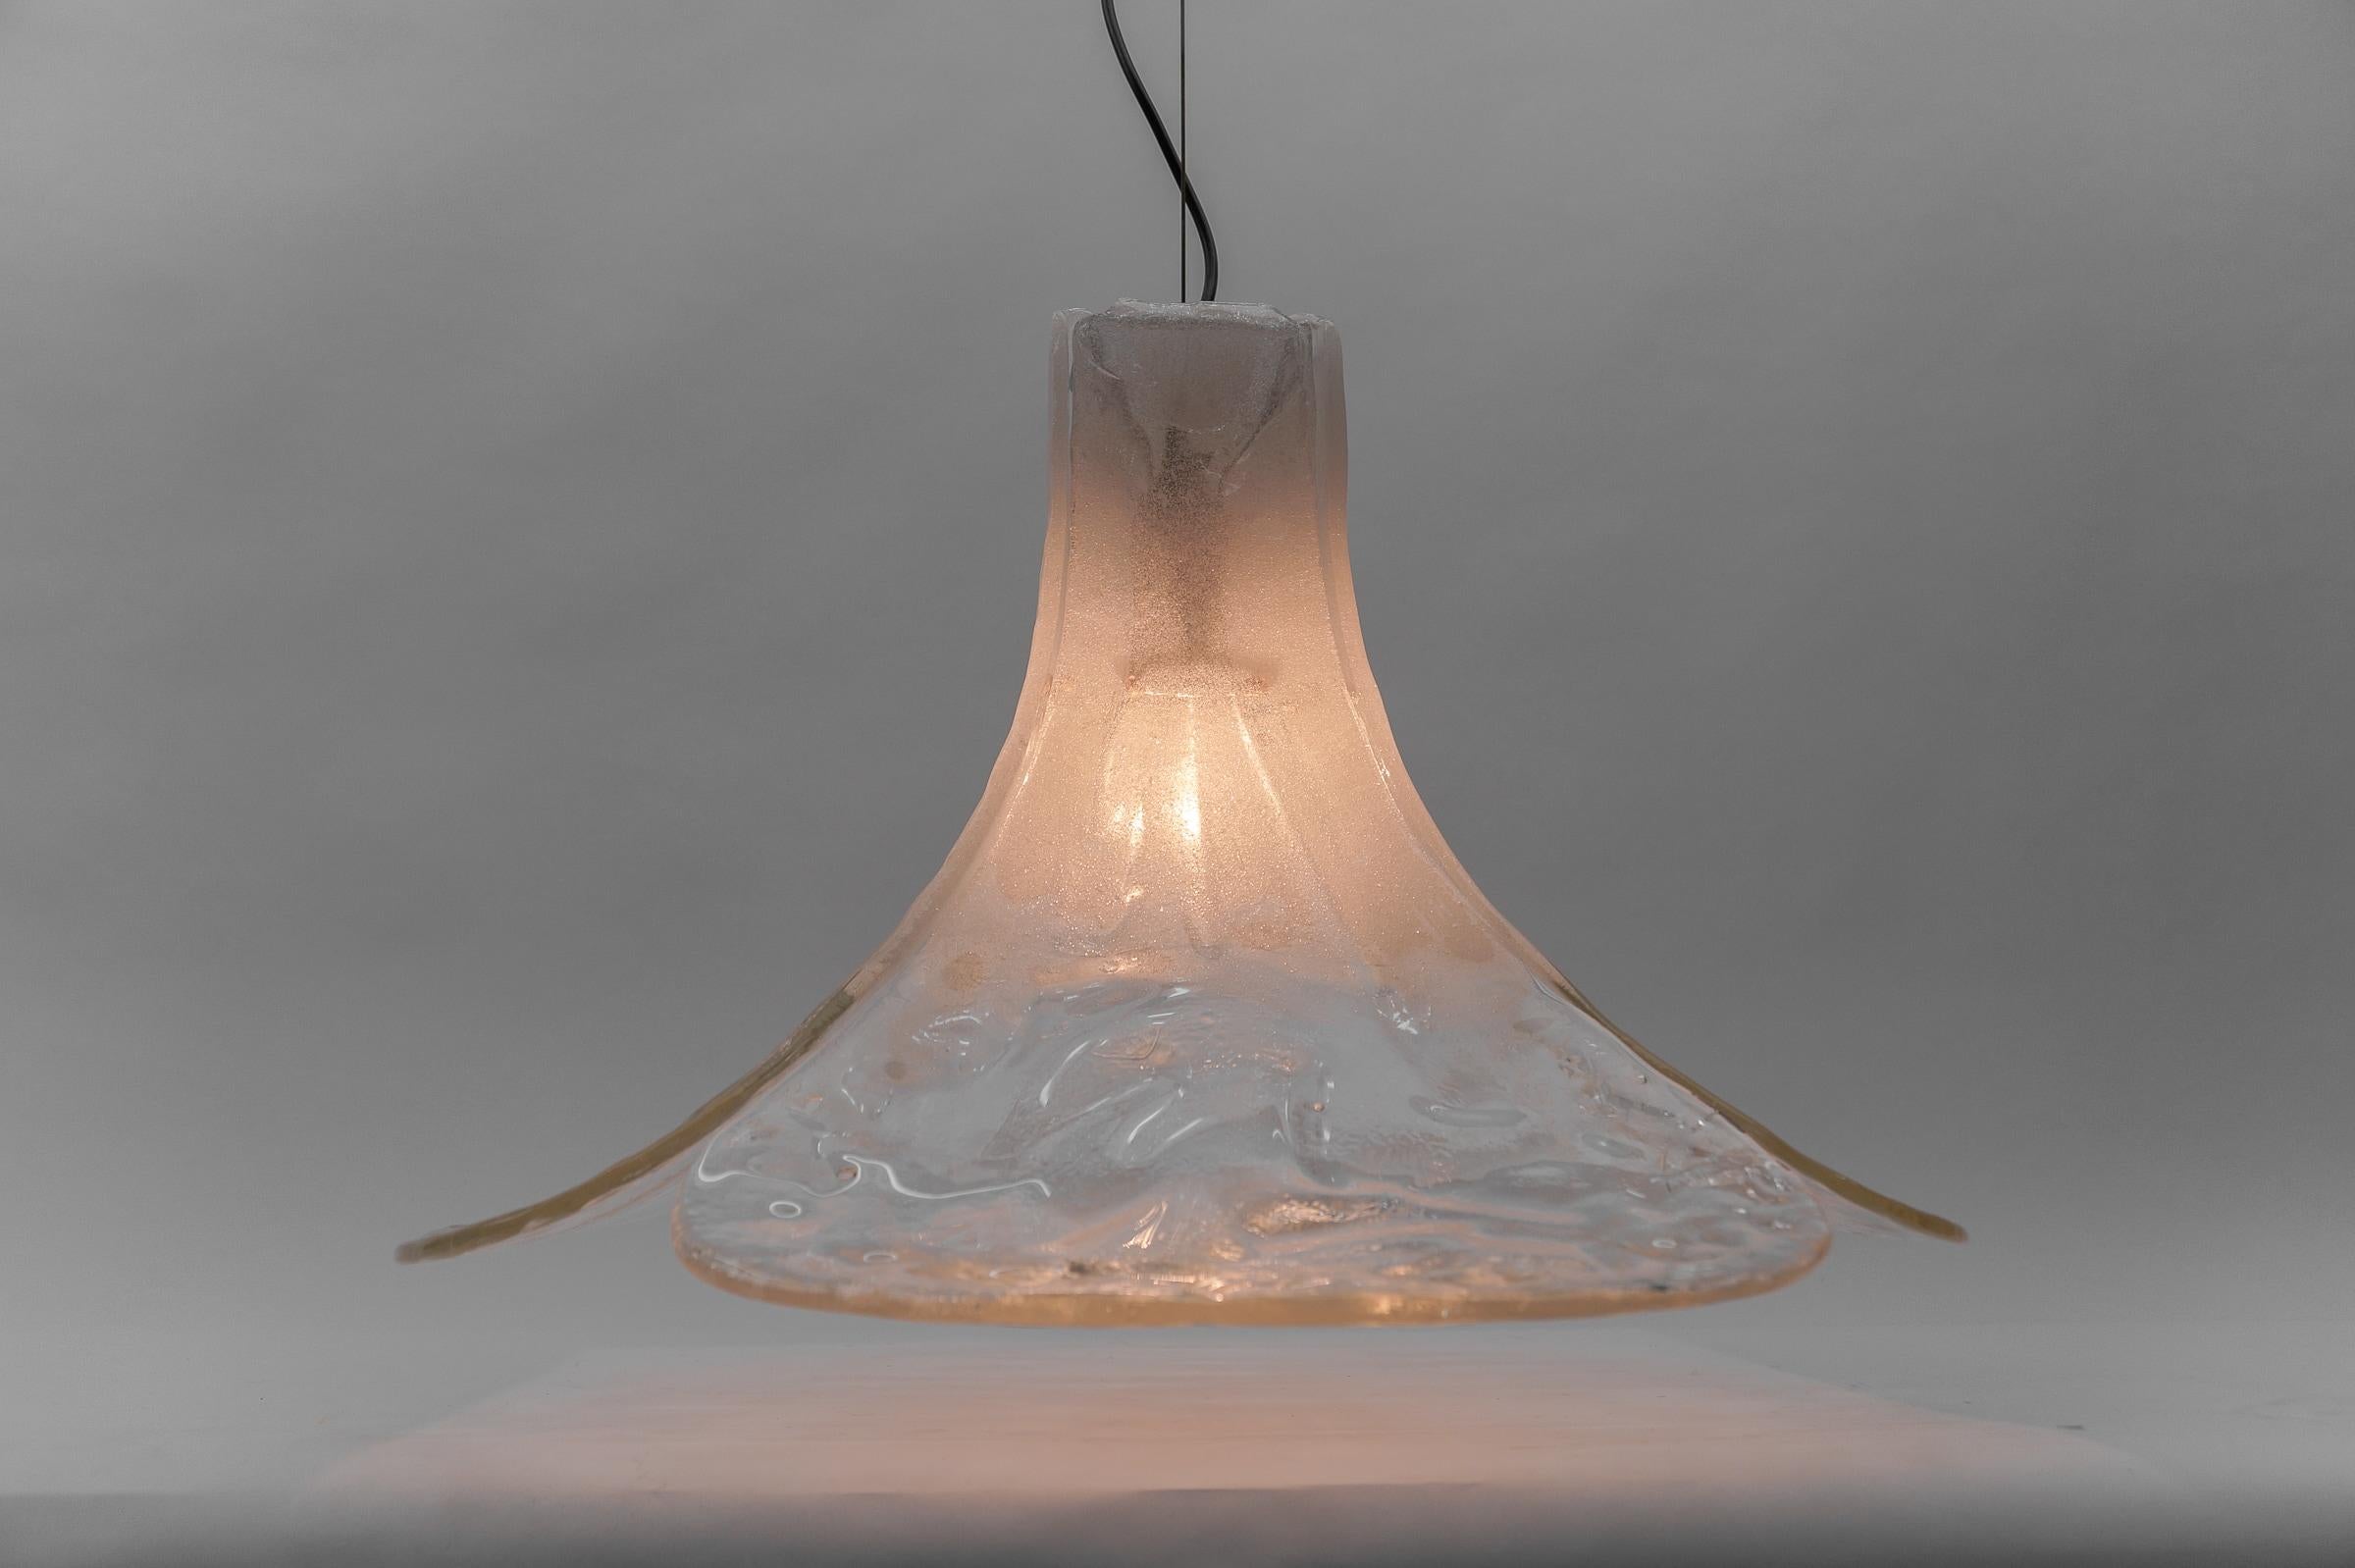 White Mazzega Pendant Lamp by Carlo Nason for J.T. Kalmar in Murano Glass, 1970s For Sale 2